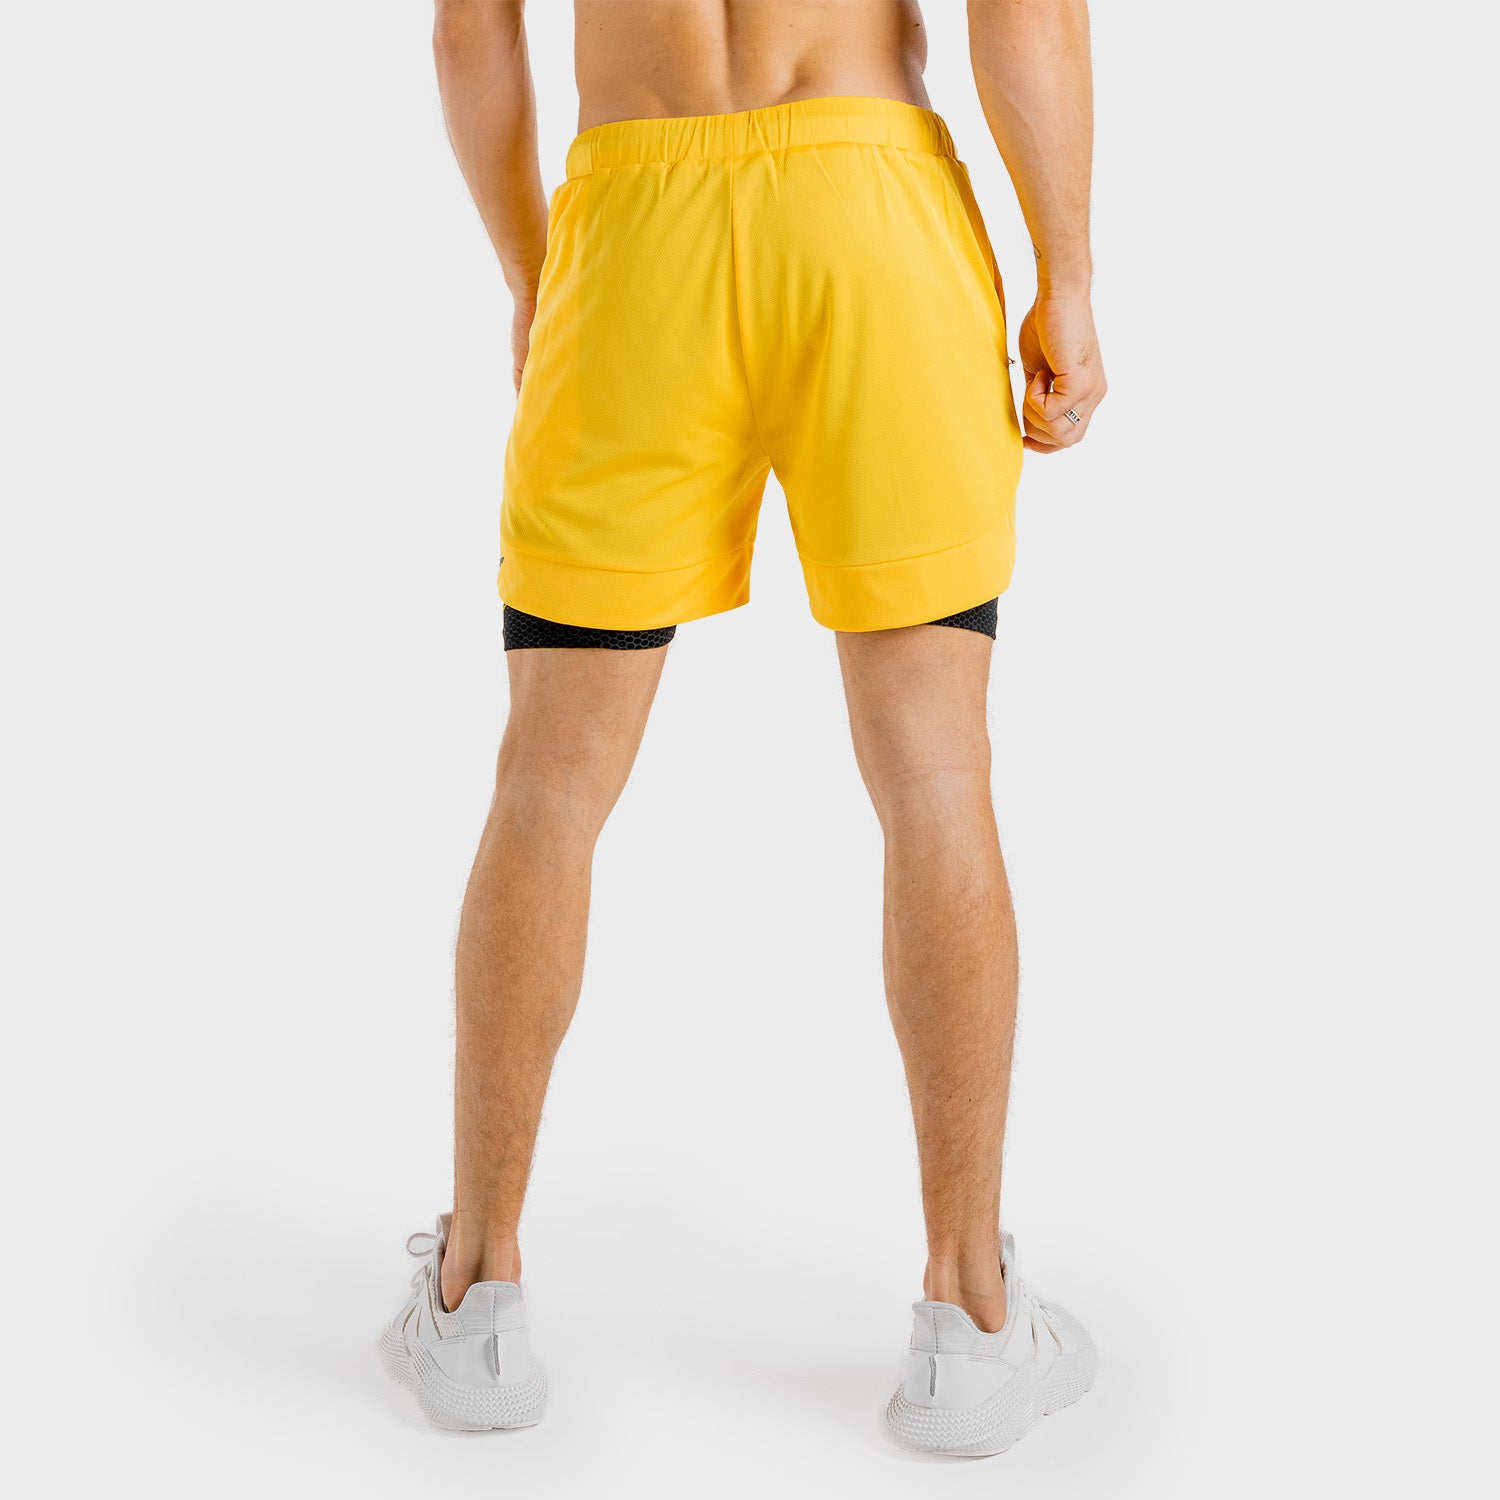 squatwolf-workout-short-for-men-batman-gym-shorts-yellow-gym-wear